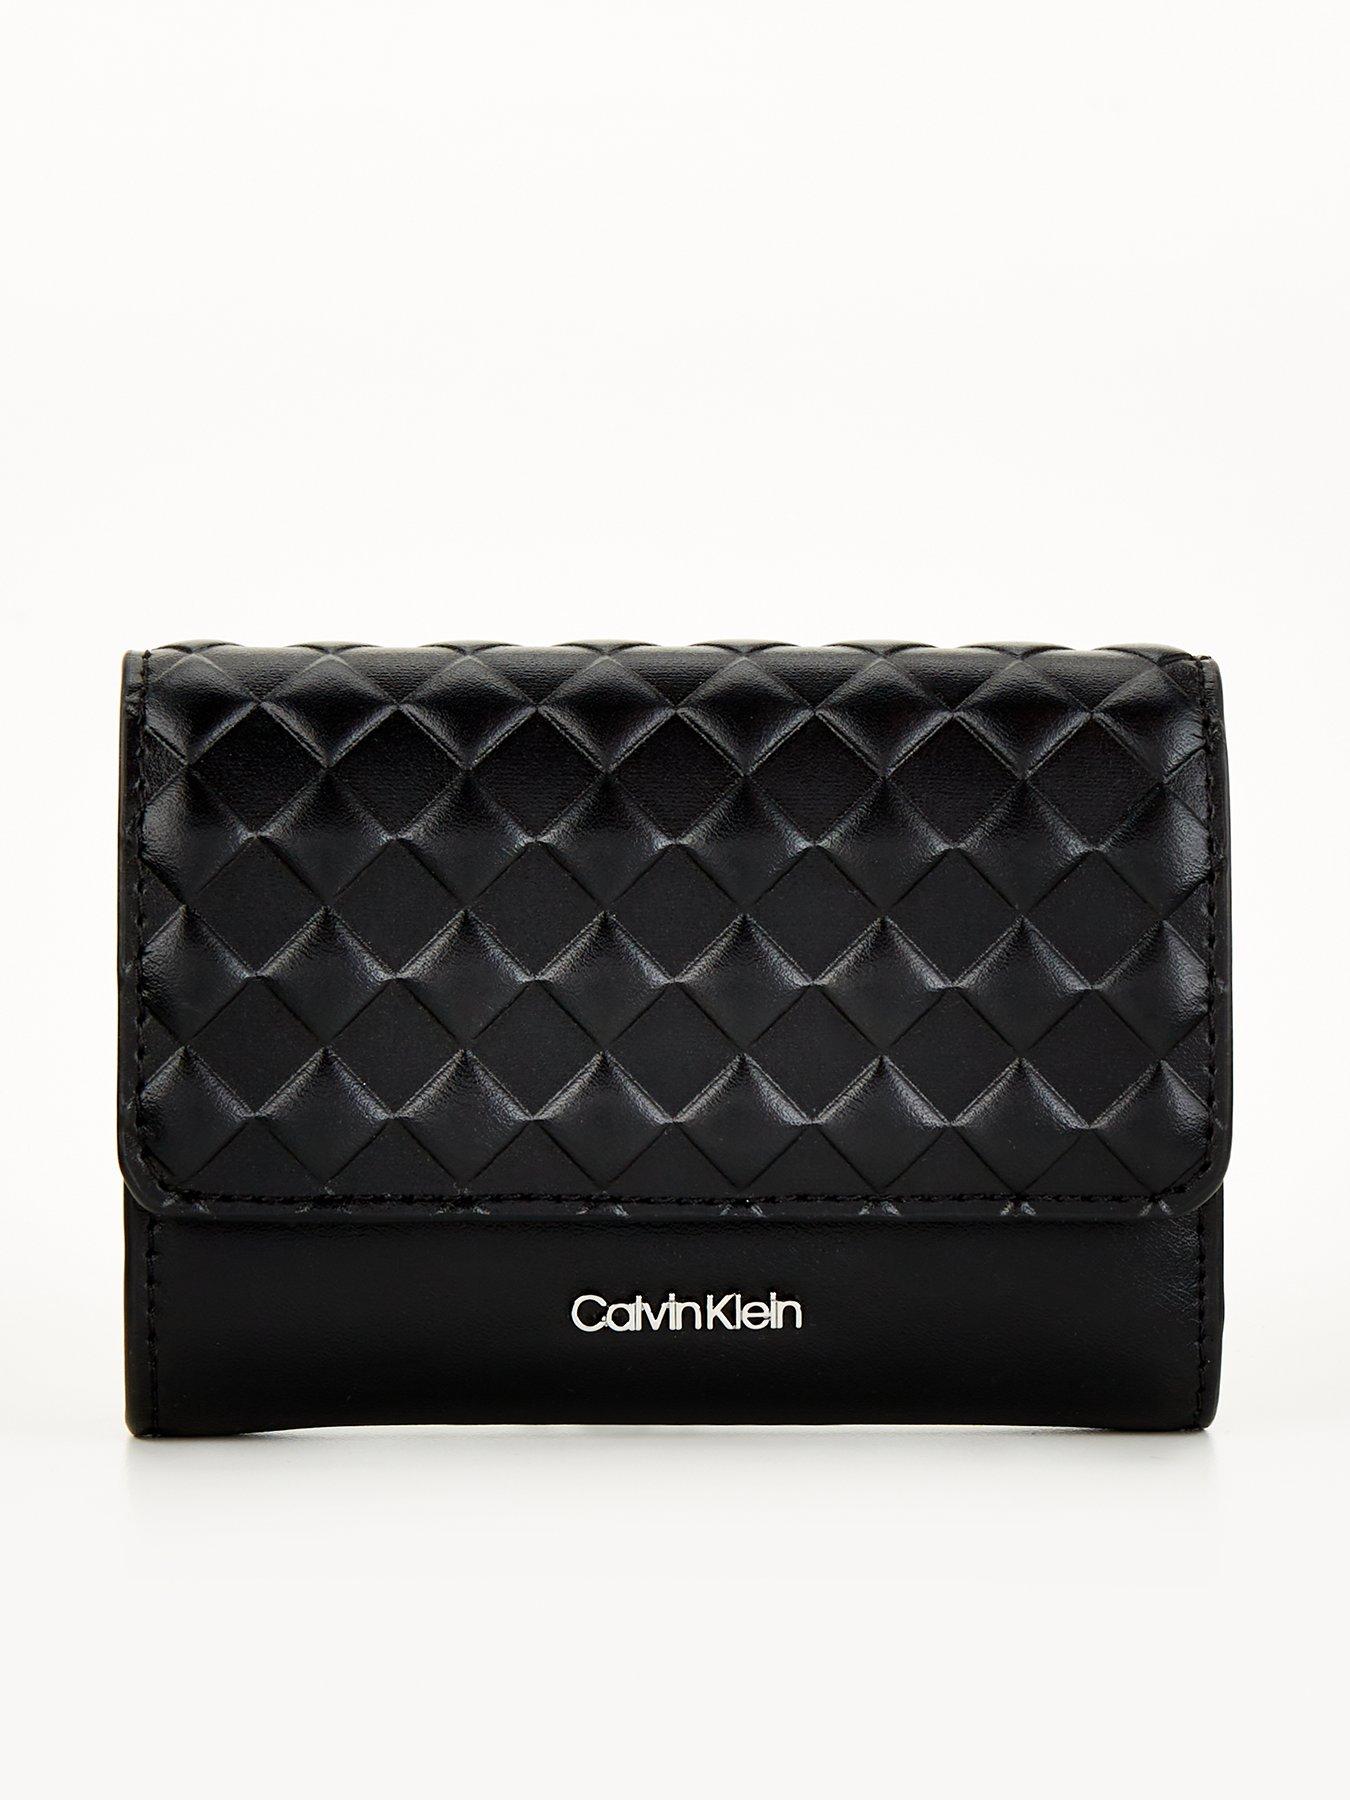 Calvin Klein Cream / Tan Off-White Spring Hand Bag Shoulder Hobo Leather  Purse | eBay